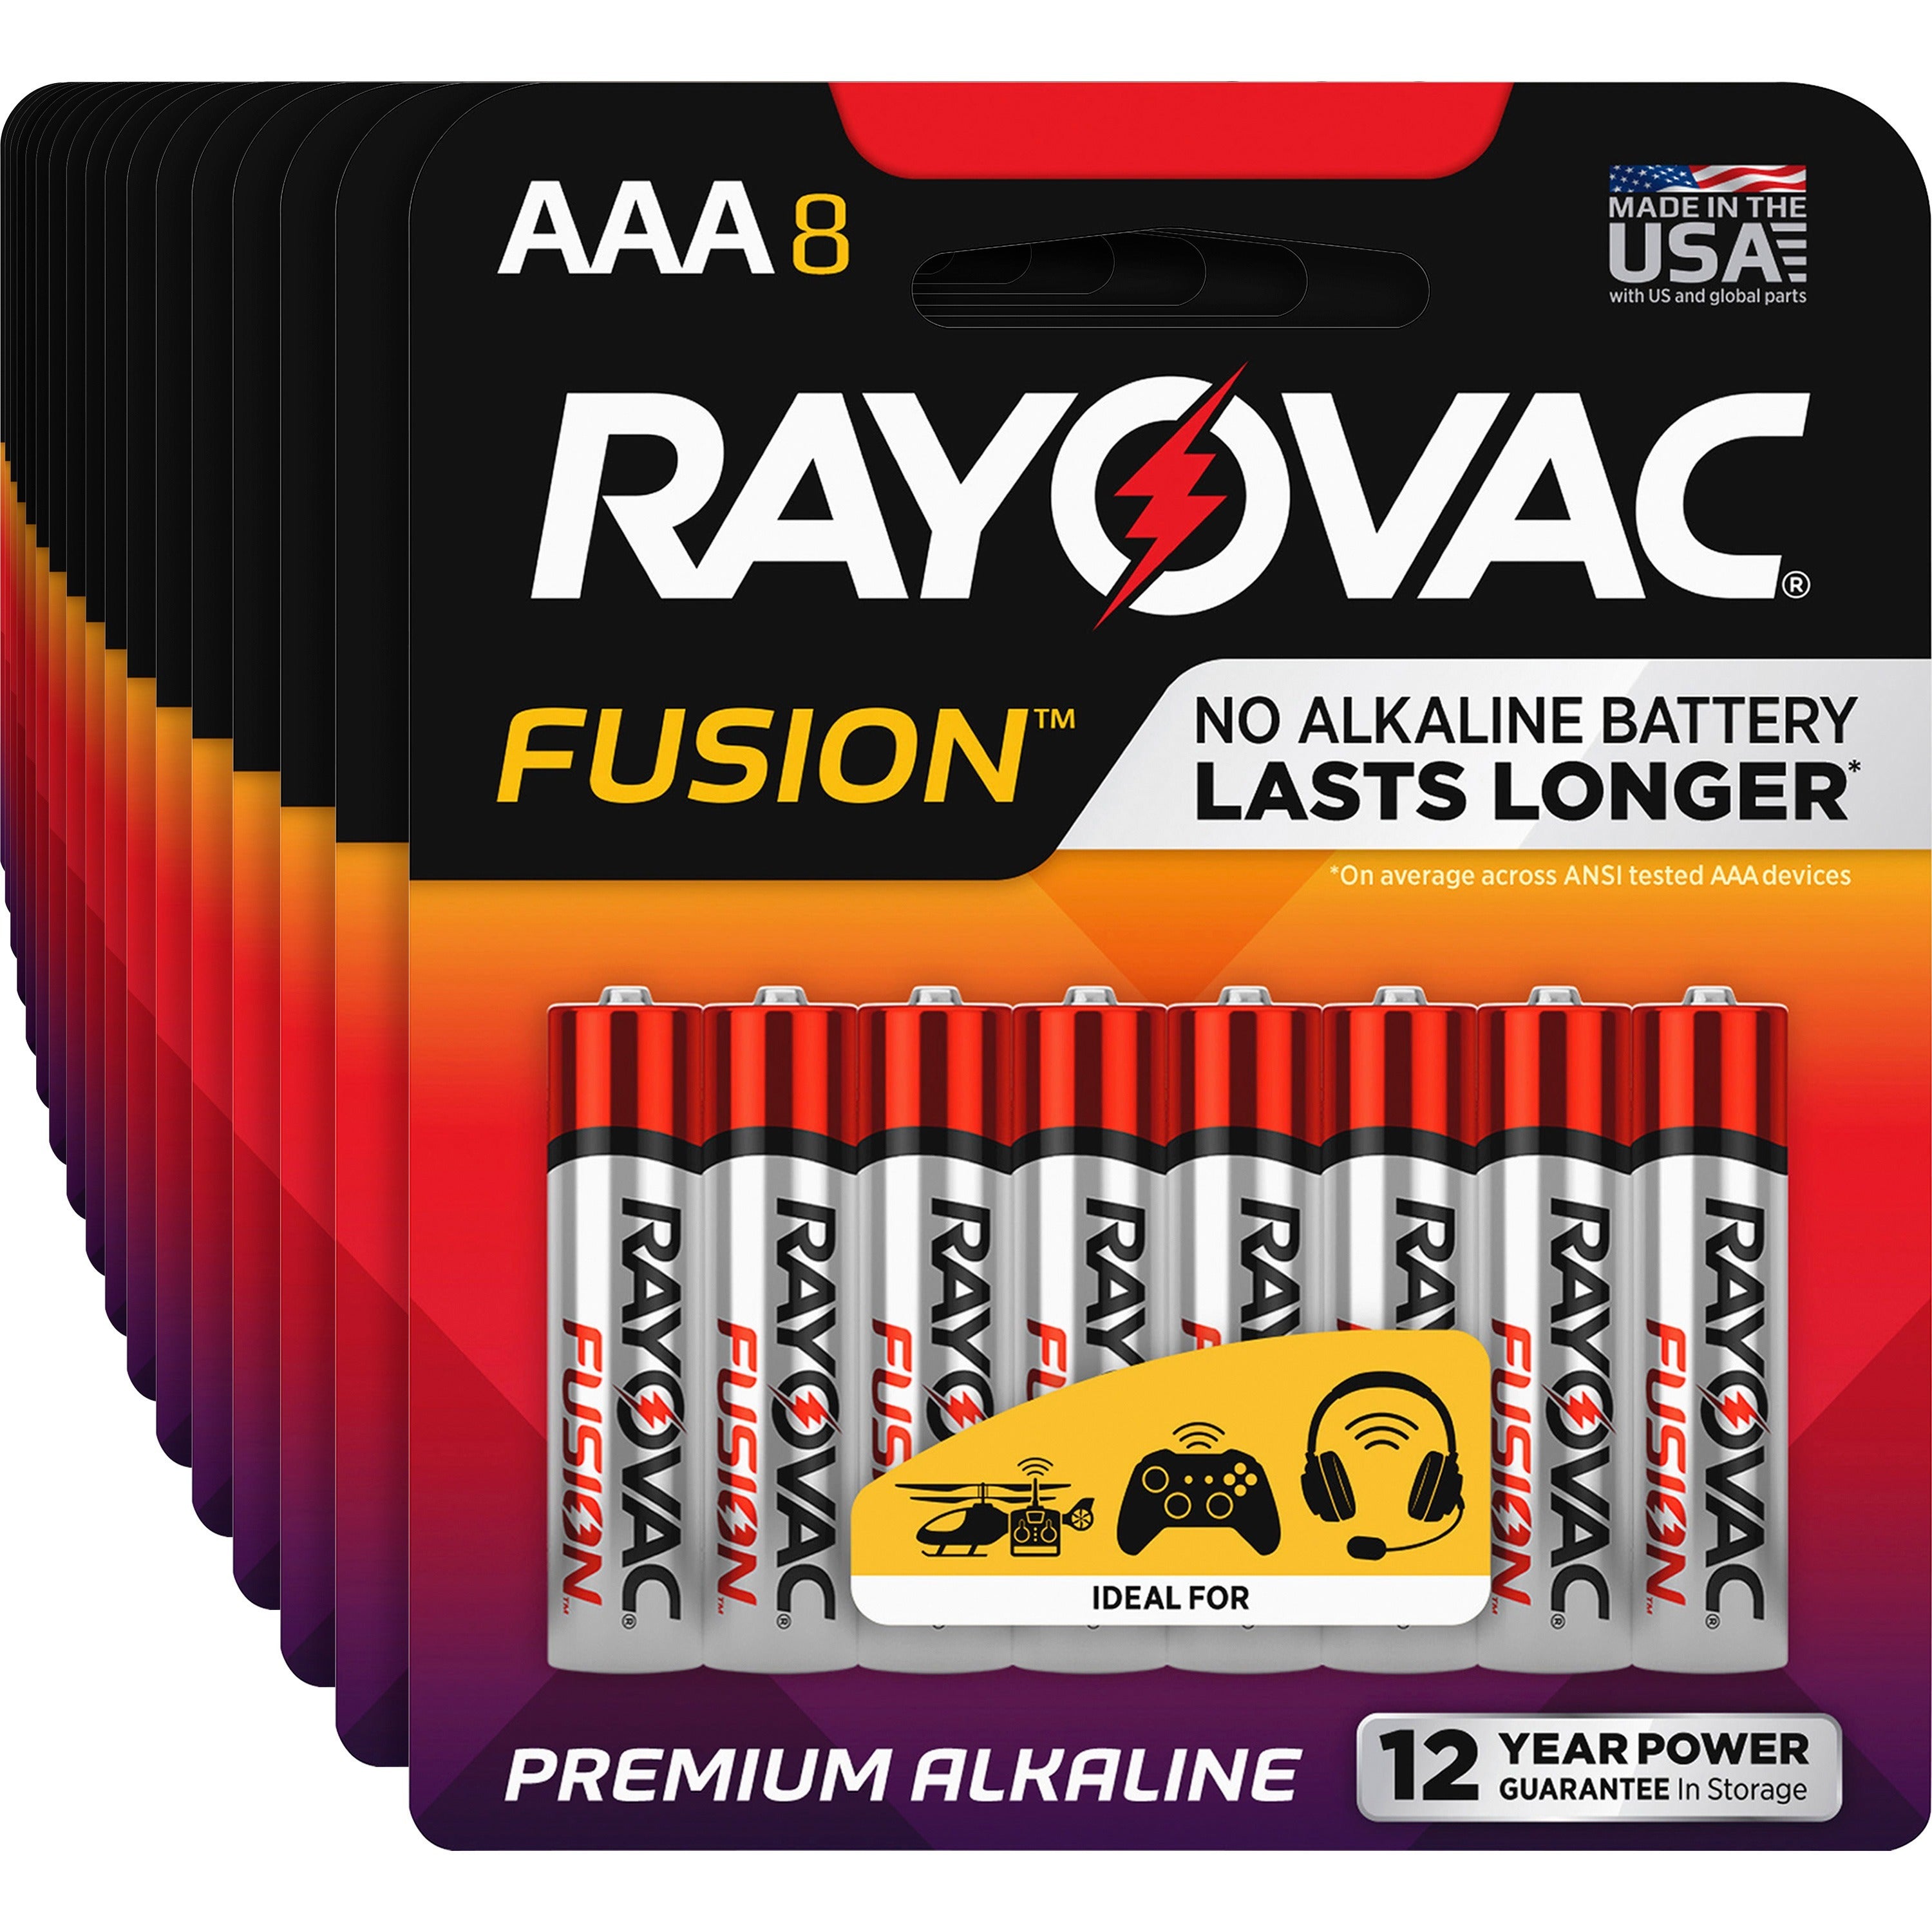 rayovac-fusion-alkaline-aaa-battery-8-packs-for-multipurpose-aaa-30-carton_ray8248tfuskct - 1